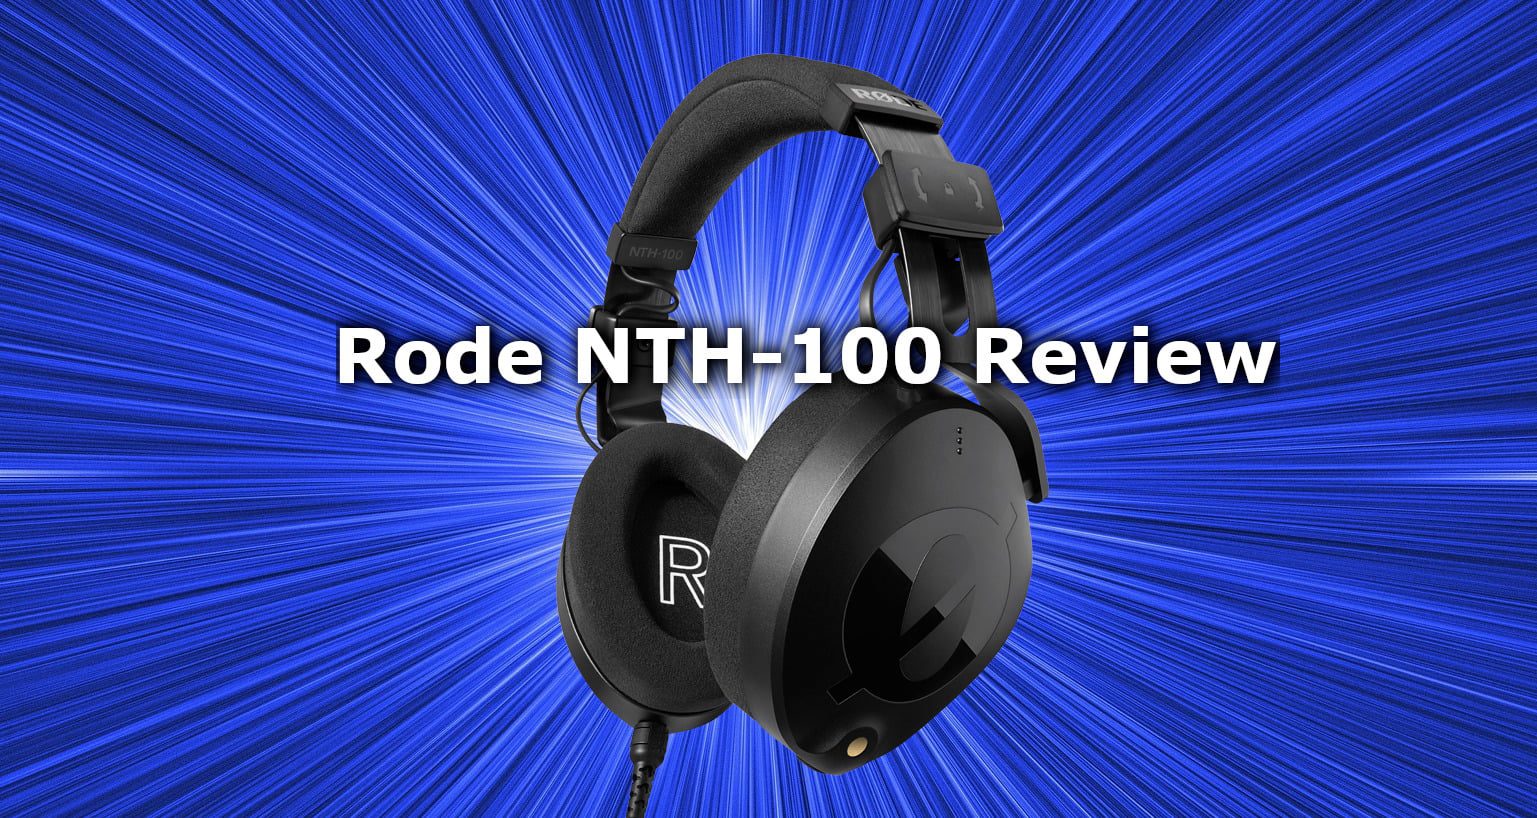 JOn Gardner Voiceovers, review of Rode nth-100 headphones